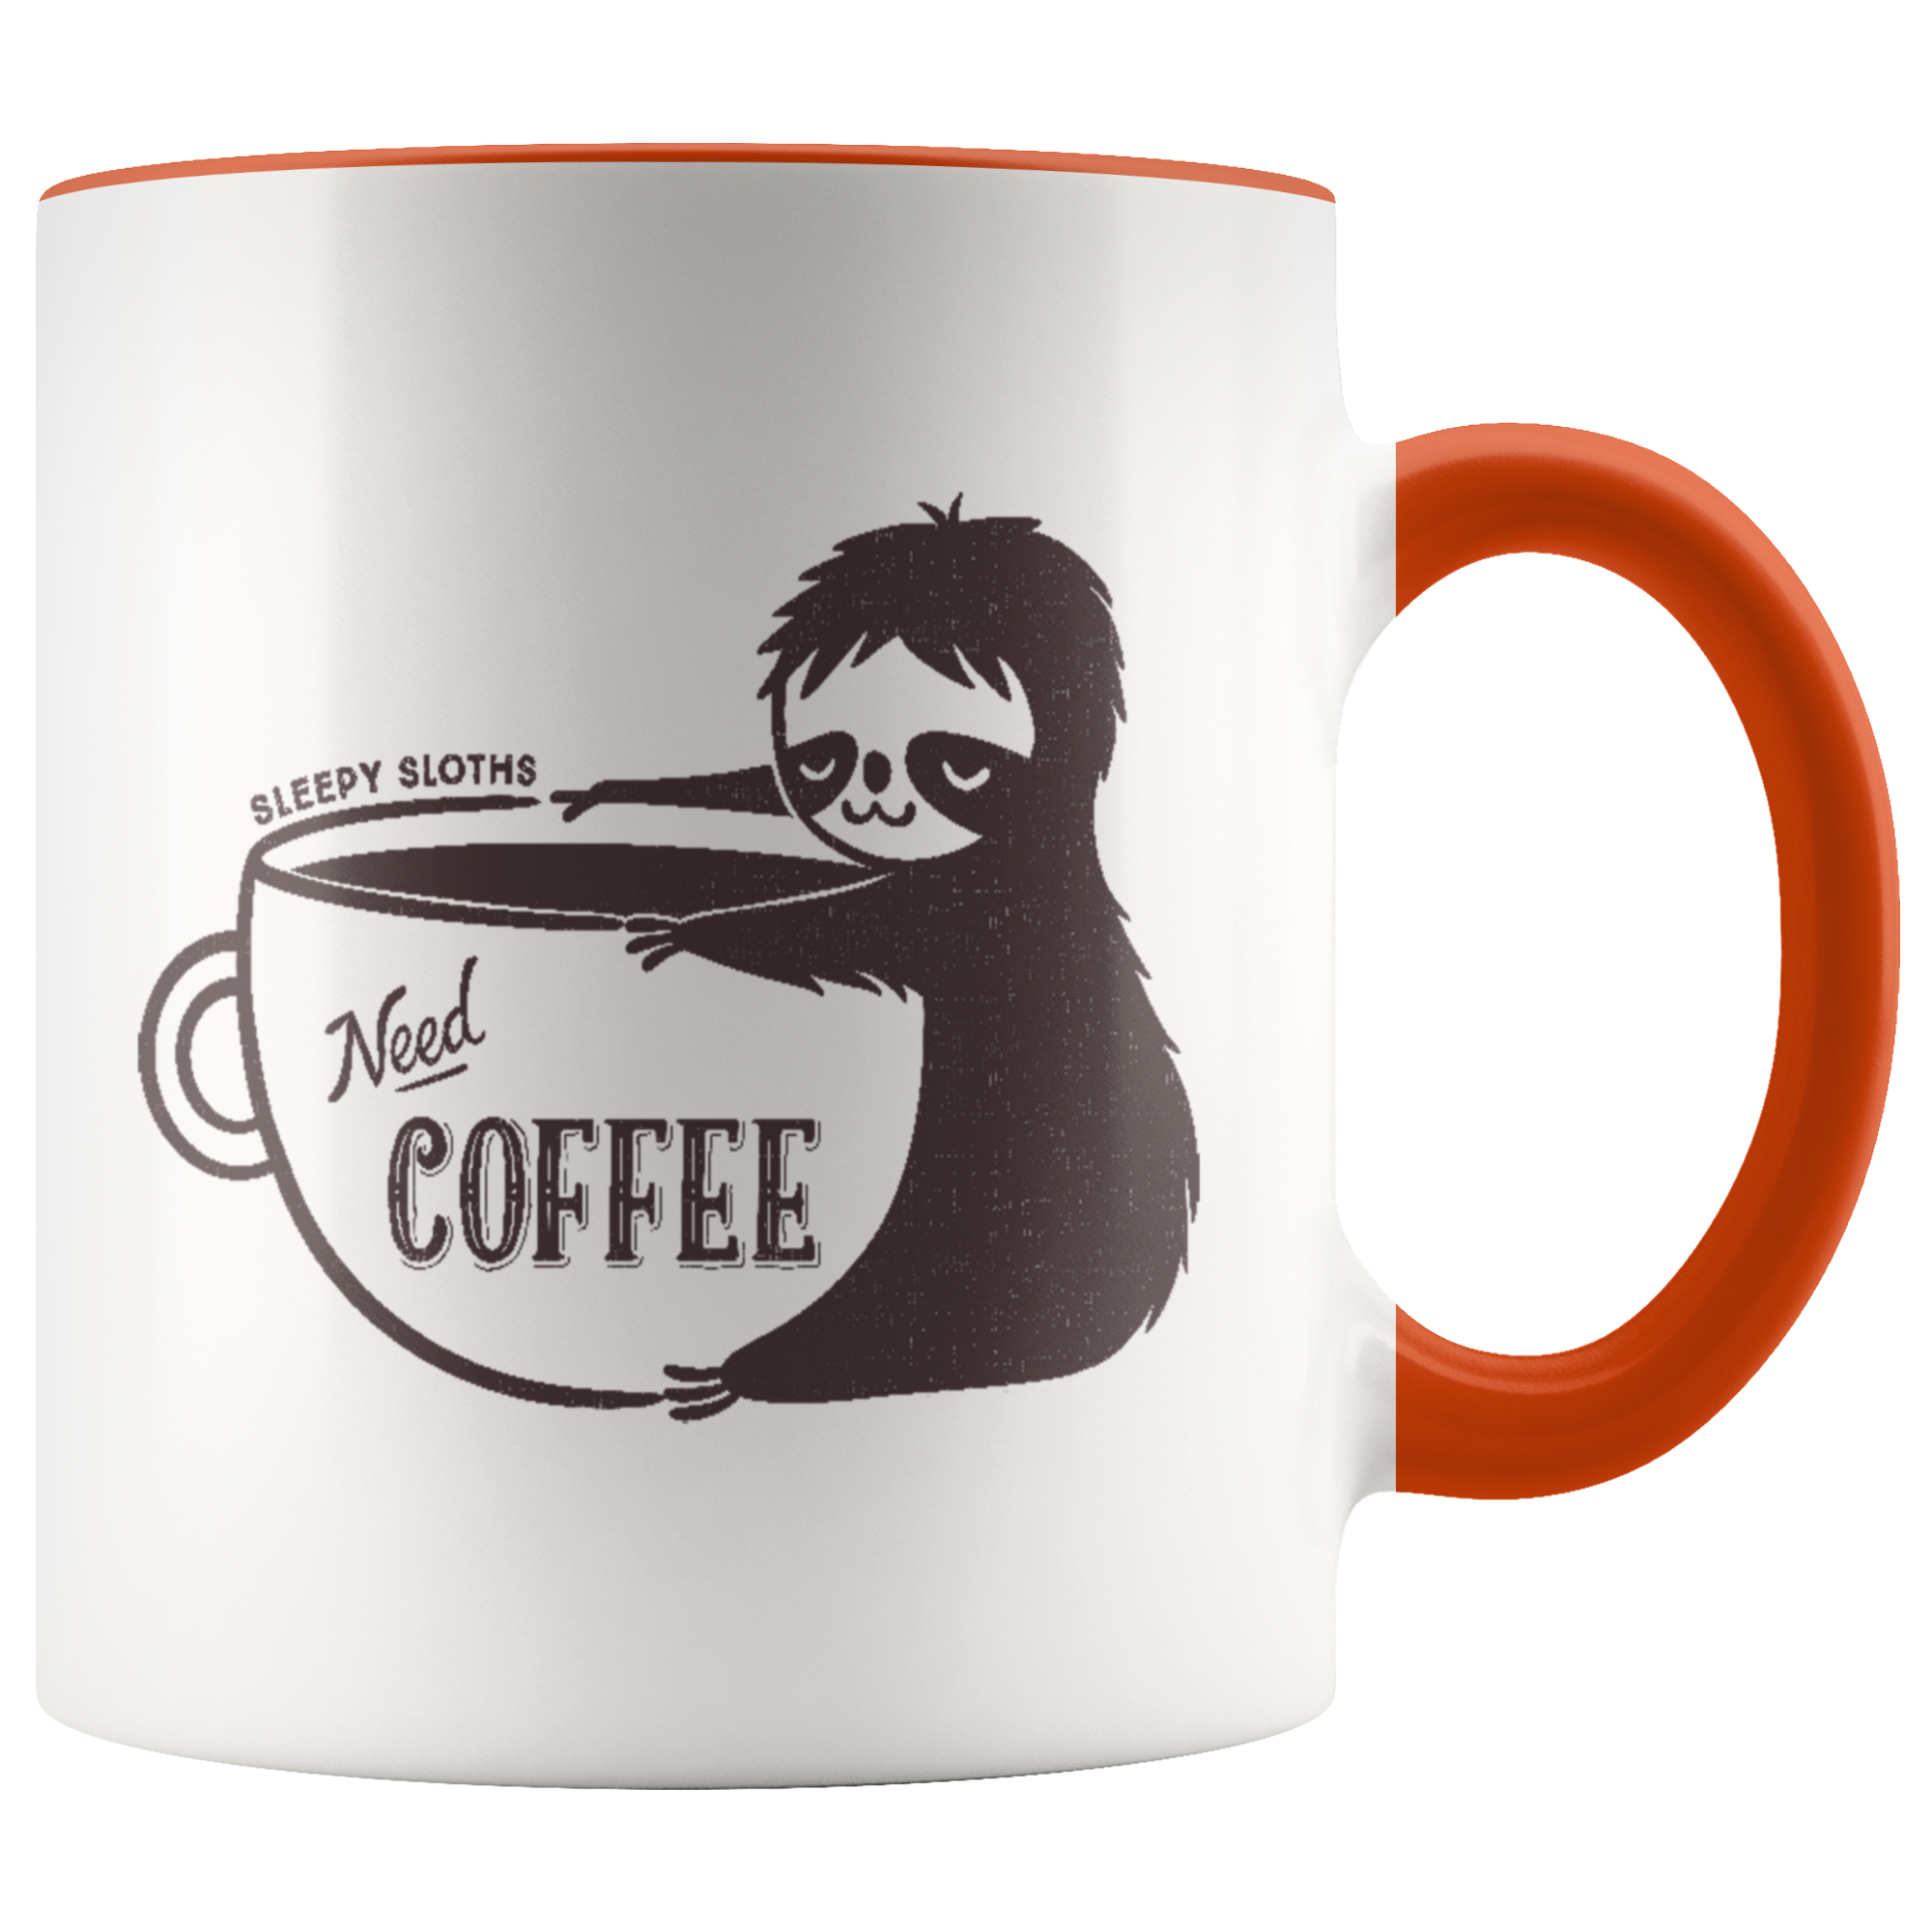 Sleepy Sloth Need Coffee Mug